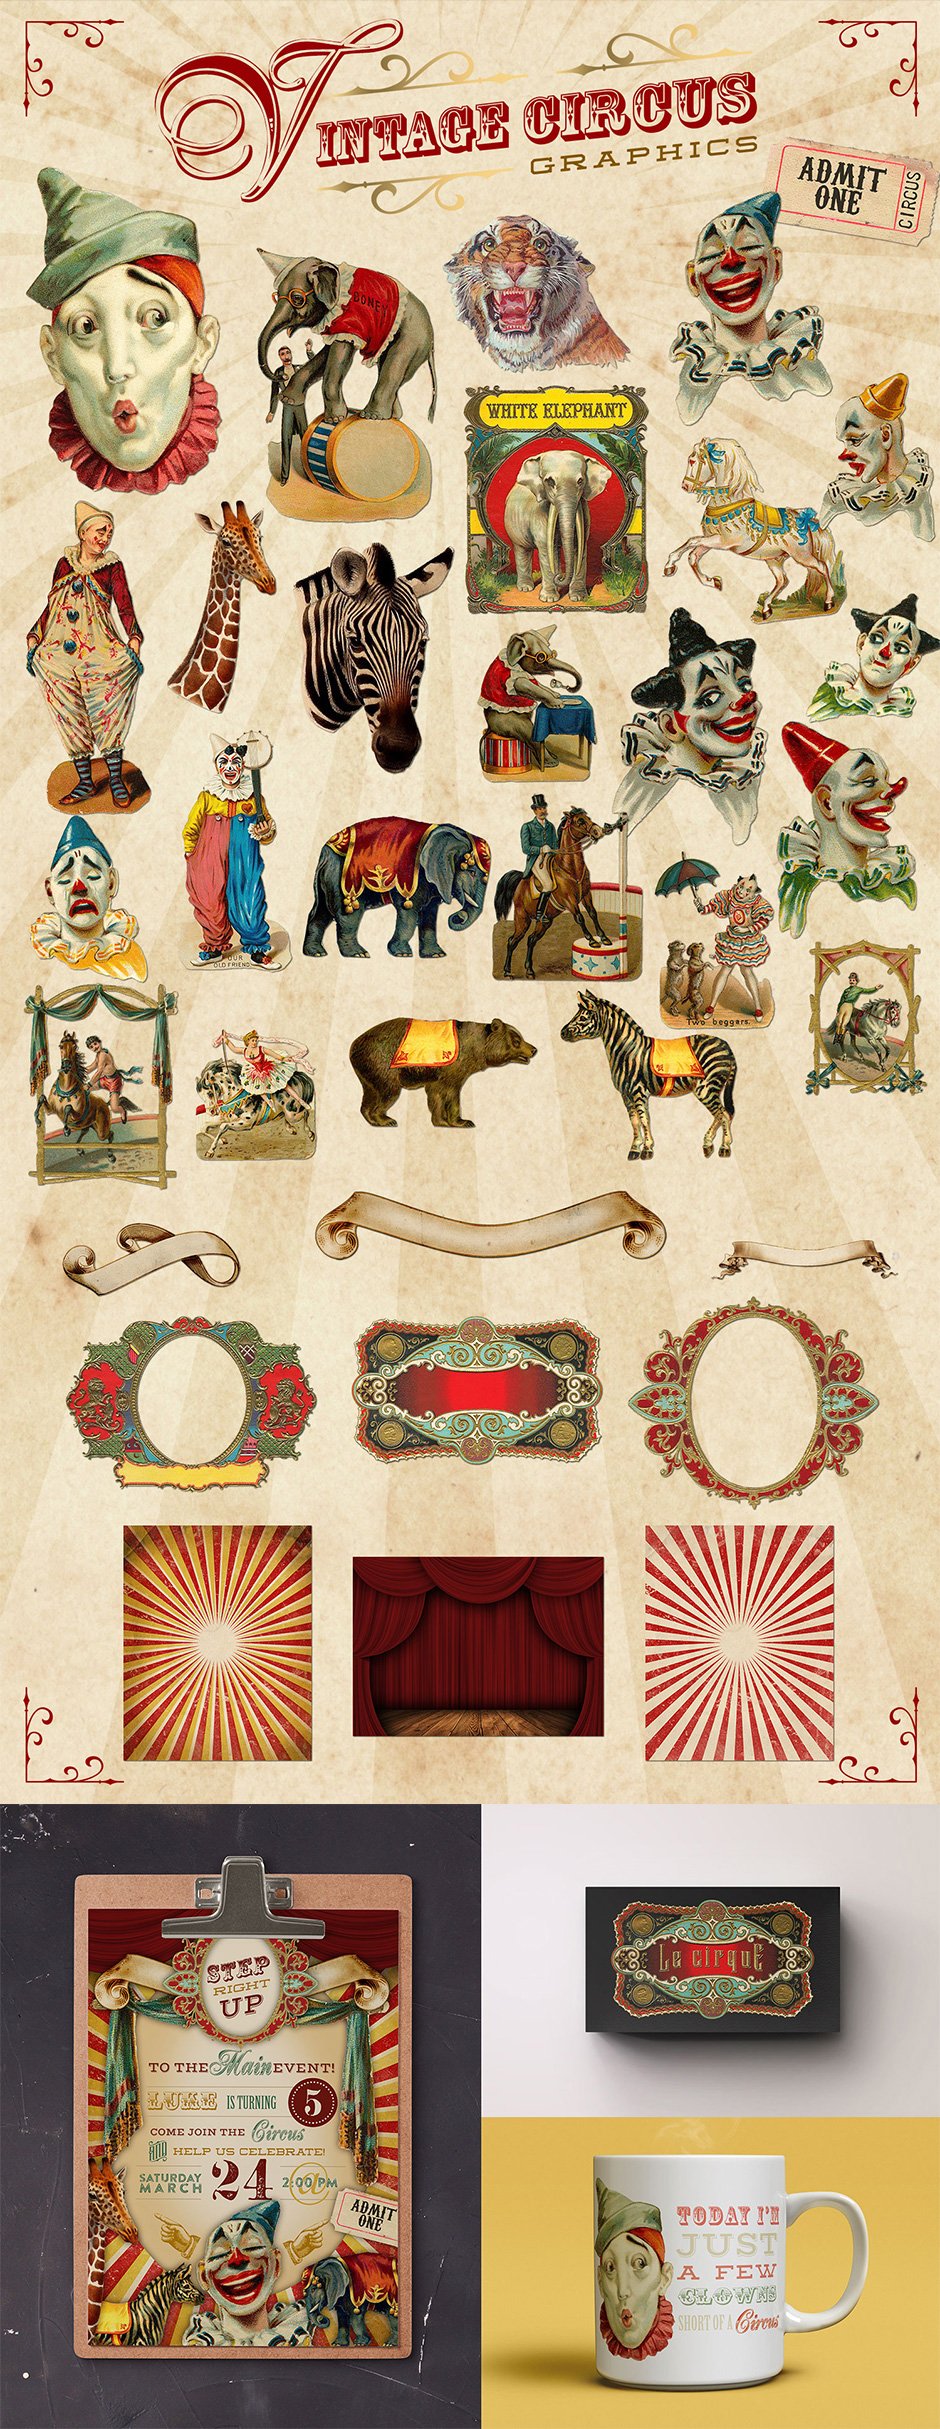 Vintage Circus Graphics